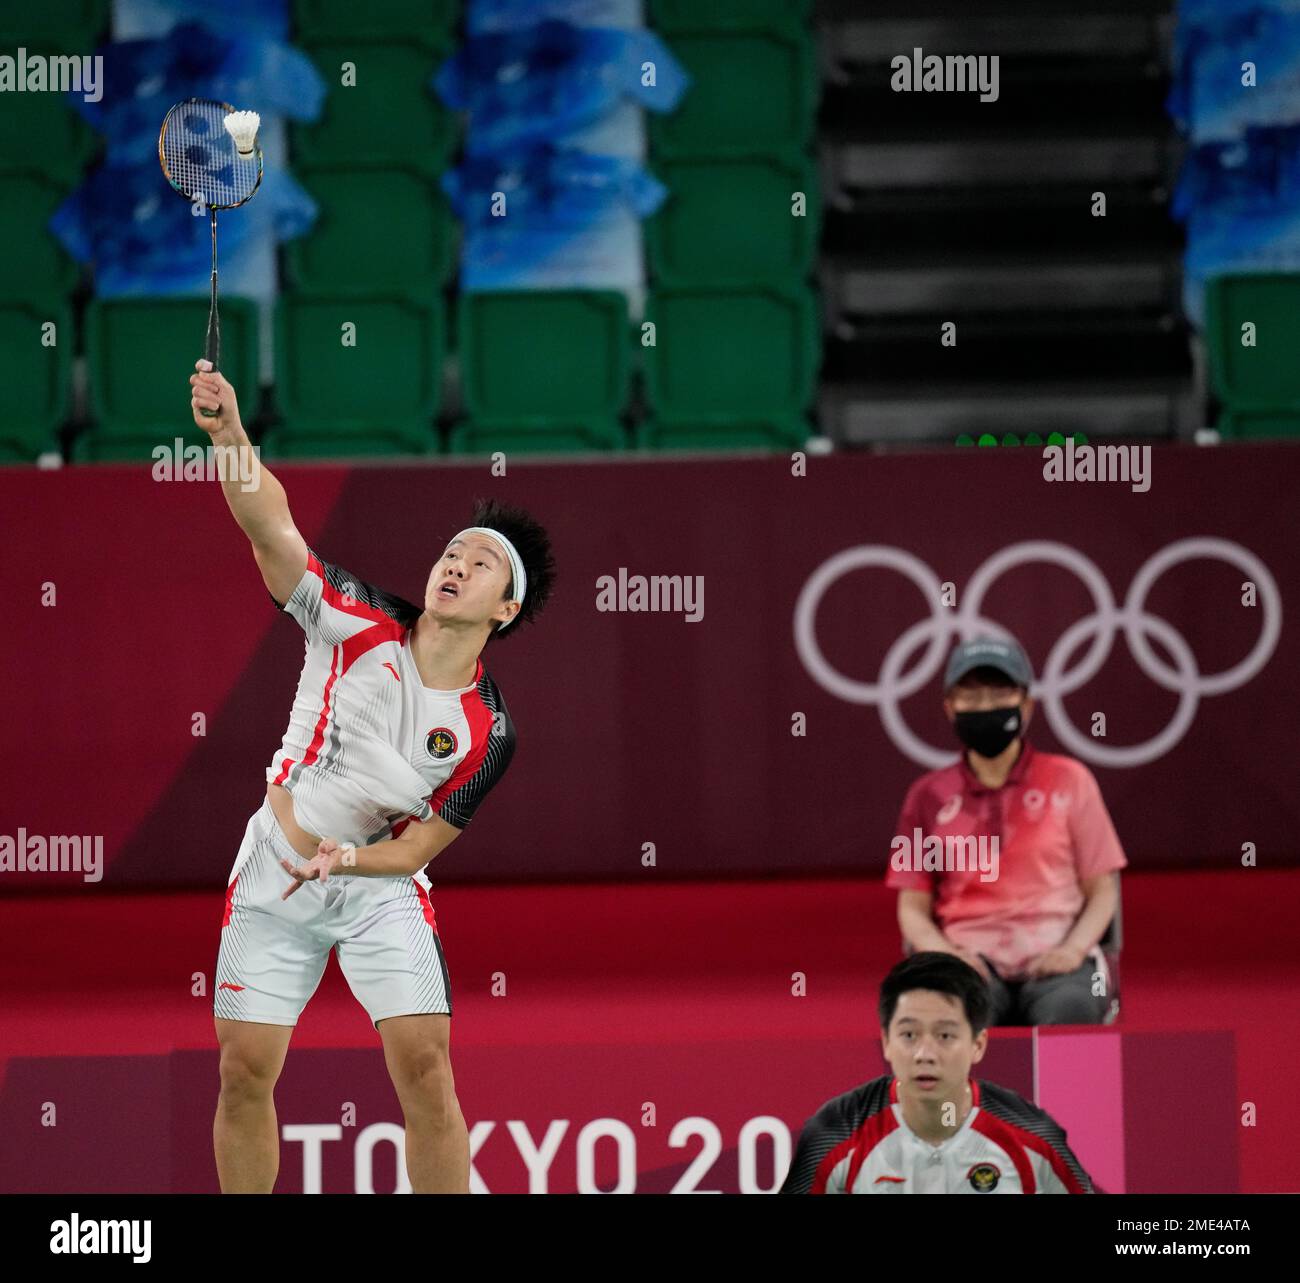 badminton world championship 2021 live